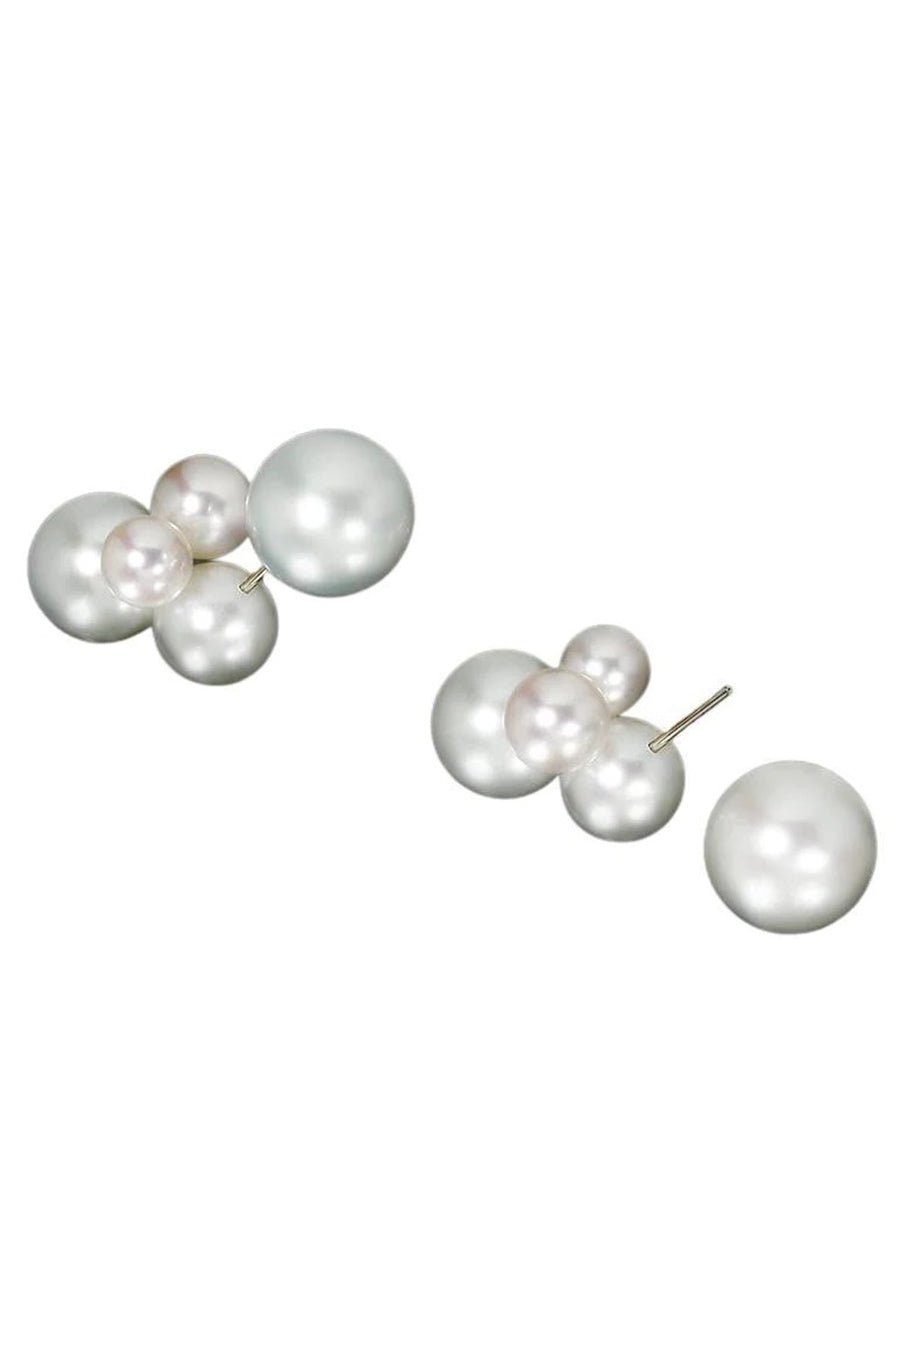 Gold Akoya Sea Pearl Earrings - Pearl Jewelry - Apearl